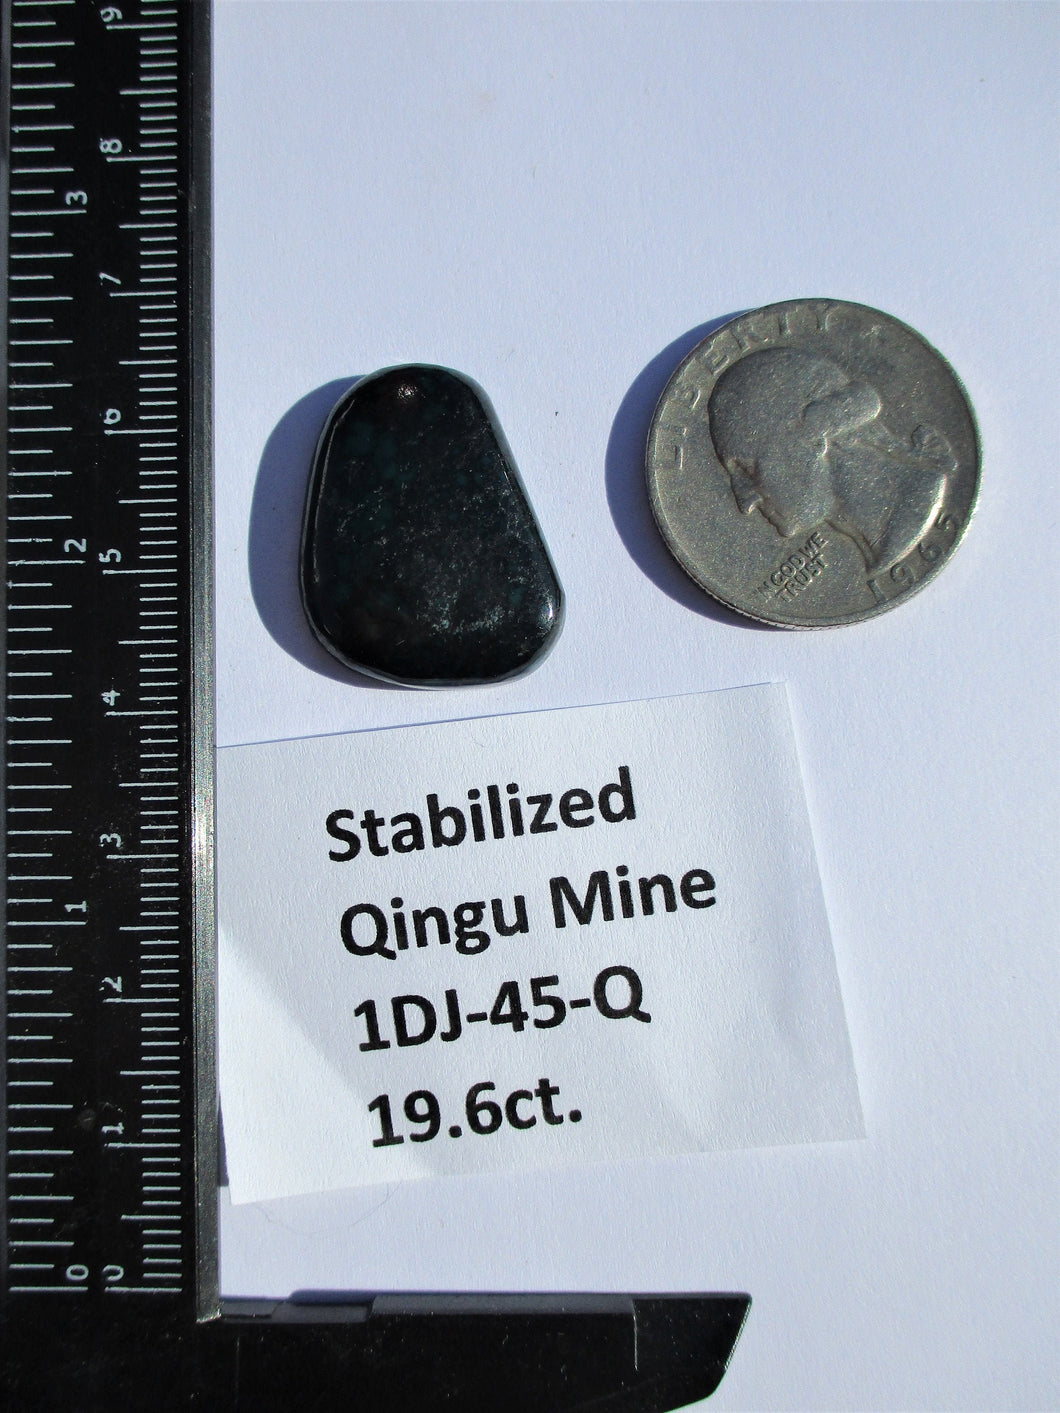 19.6 ct. (24x17x5 mm) Stabilized Qingu Mine (Hubei) Turquoise Cabochon Gemstone, 1DJ 45